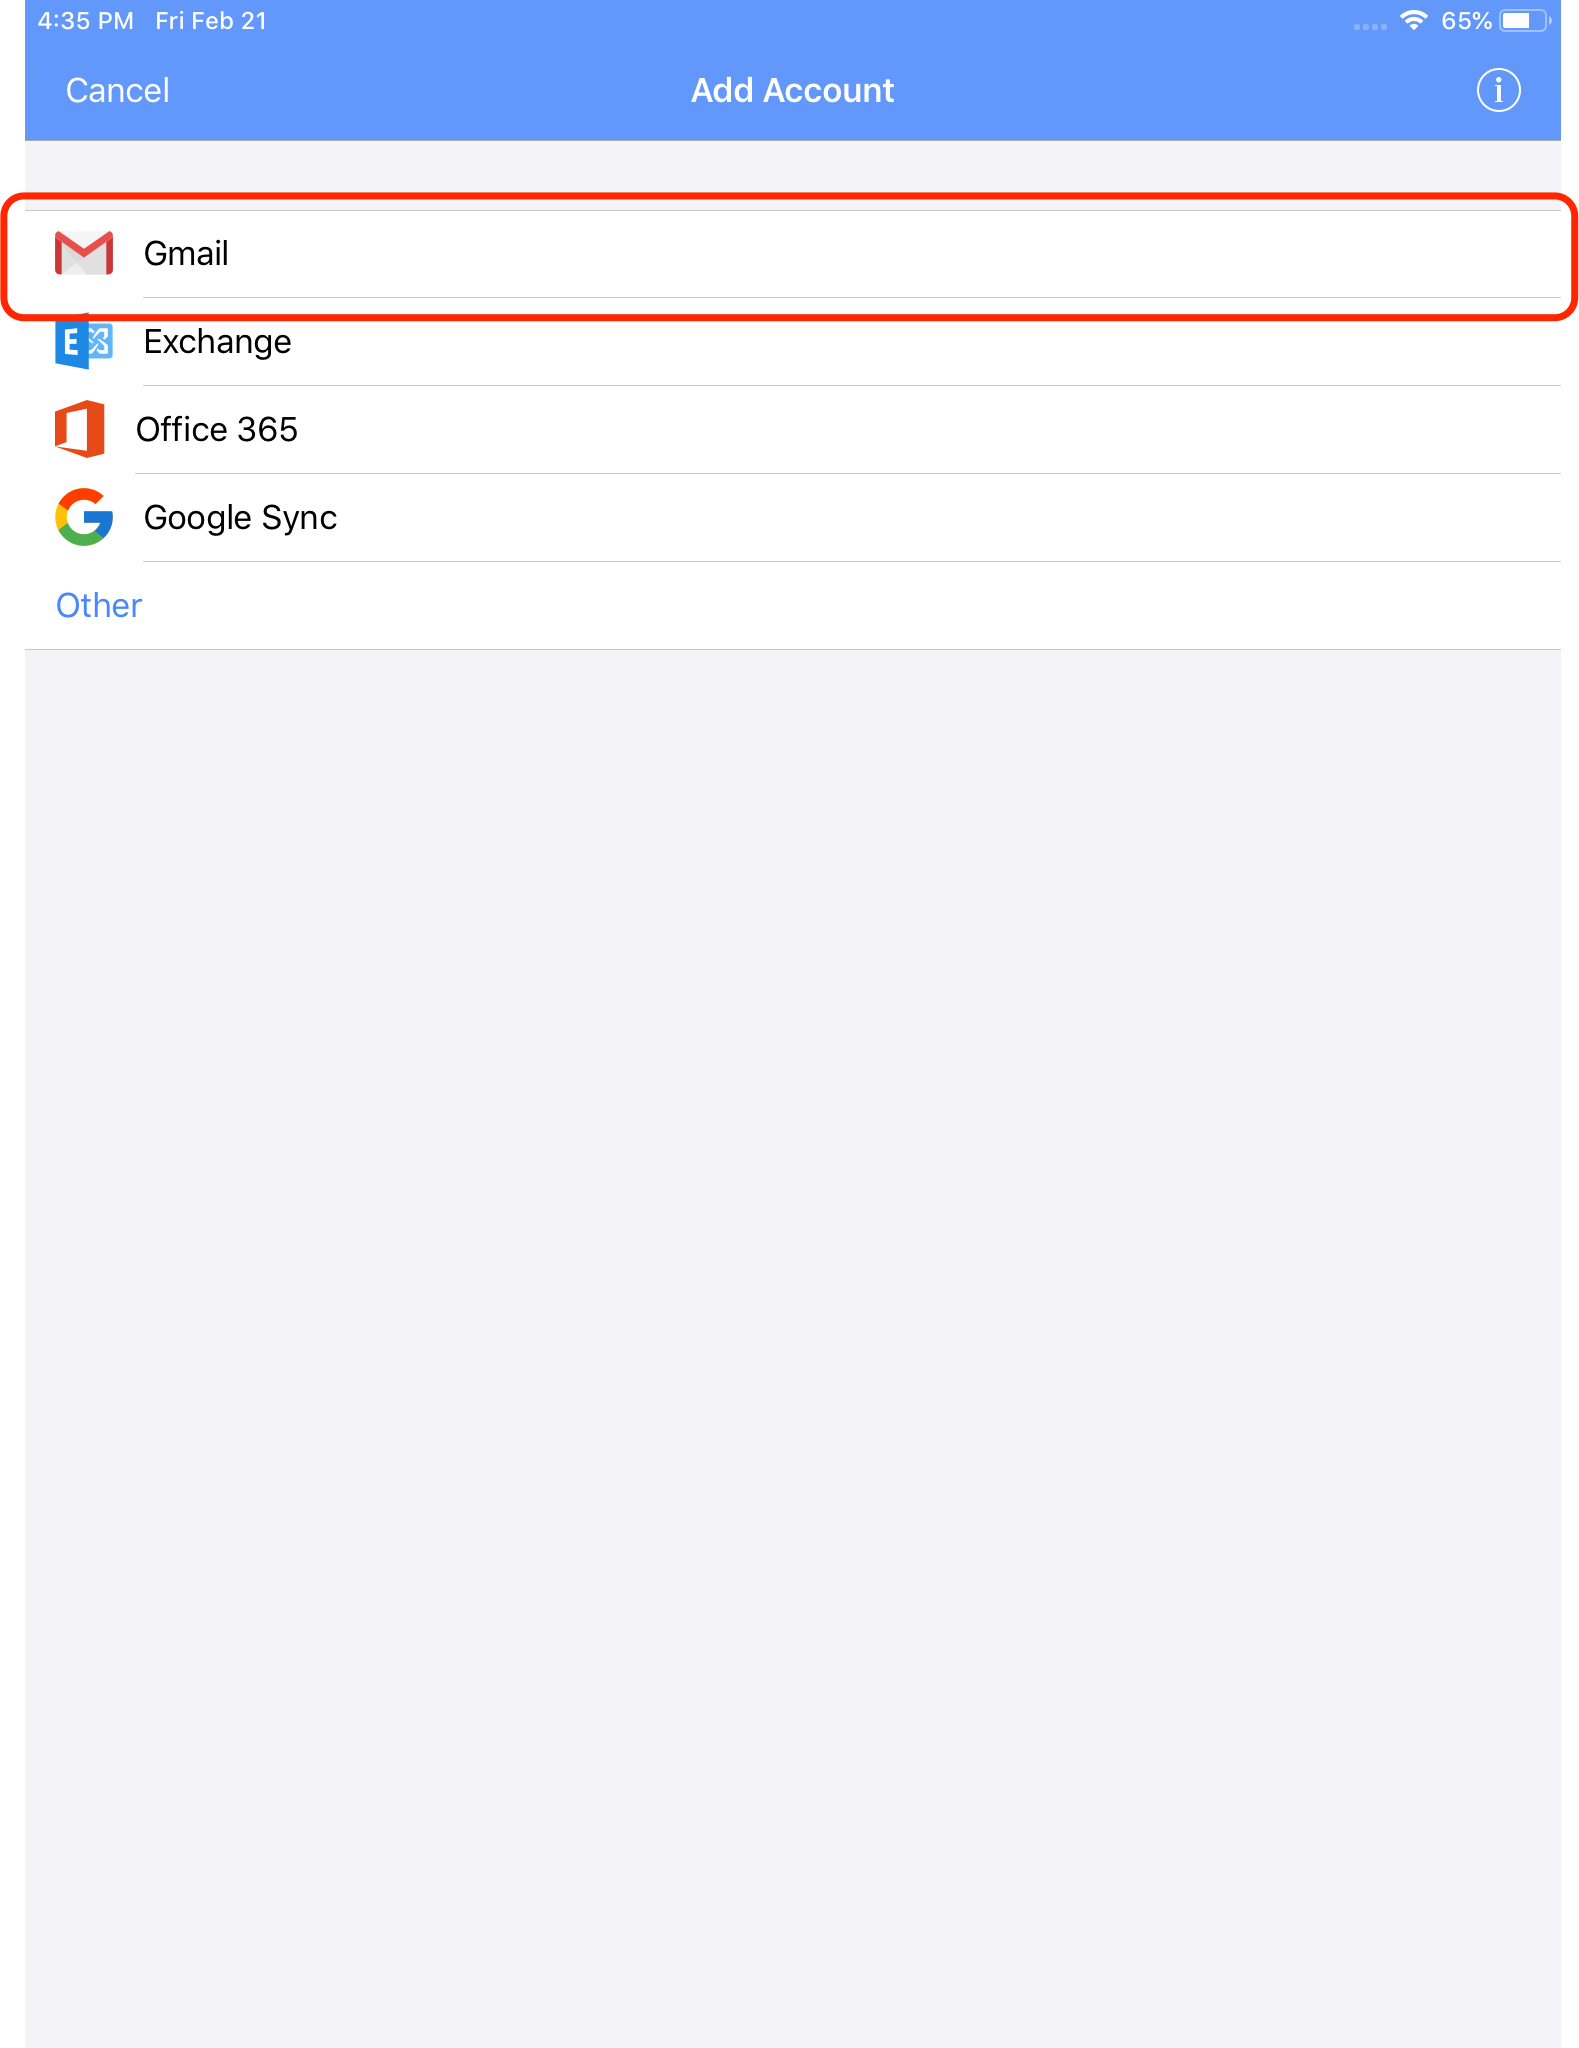 Virtru app Add Account screen with Gmail circled